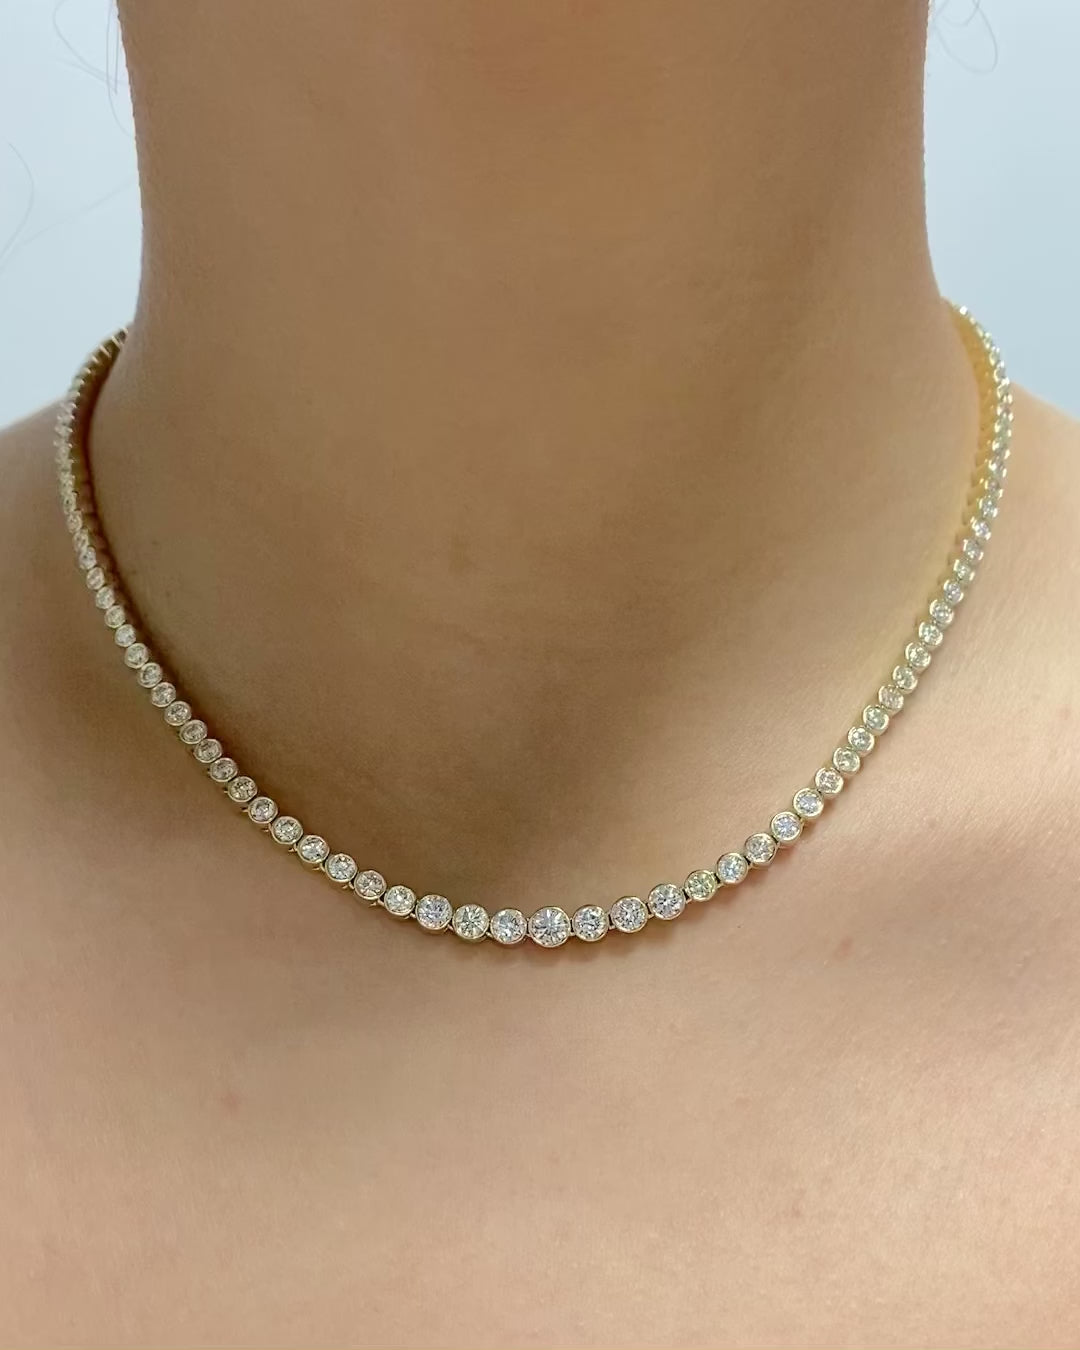 Graduated Bezel Diamond Necklace